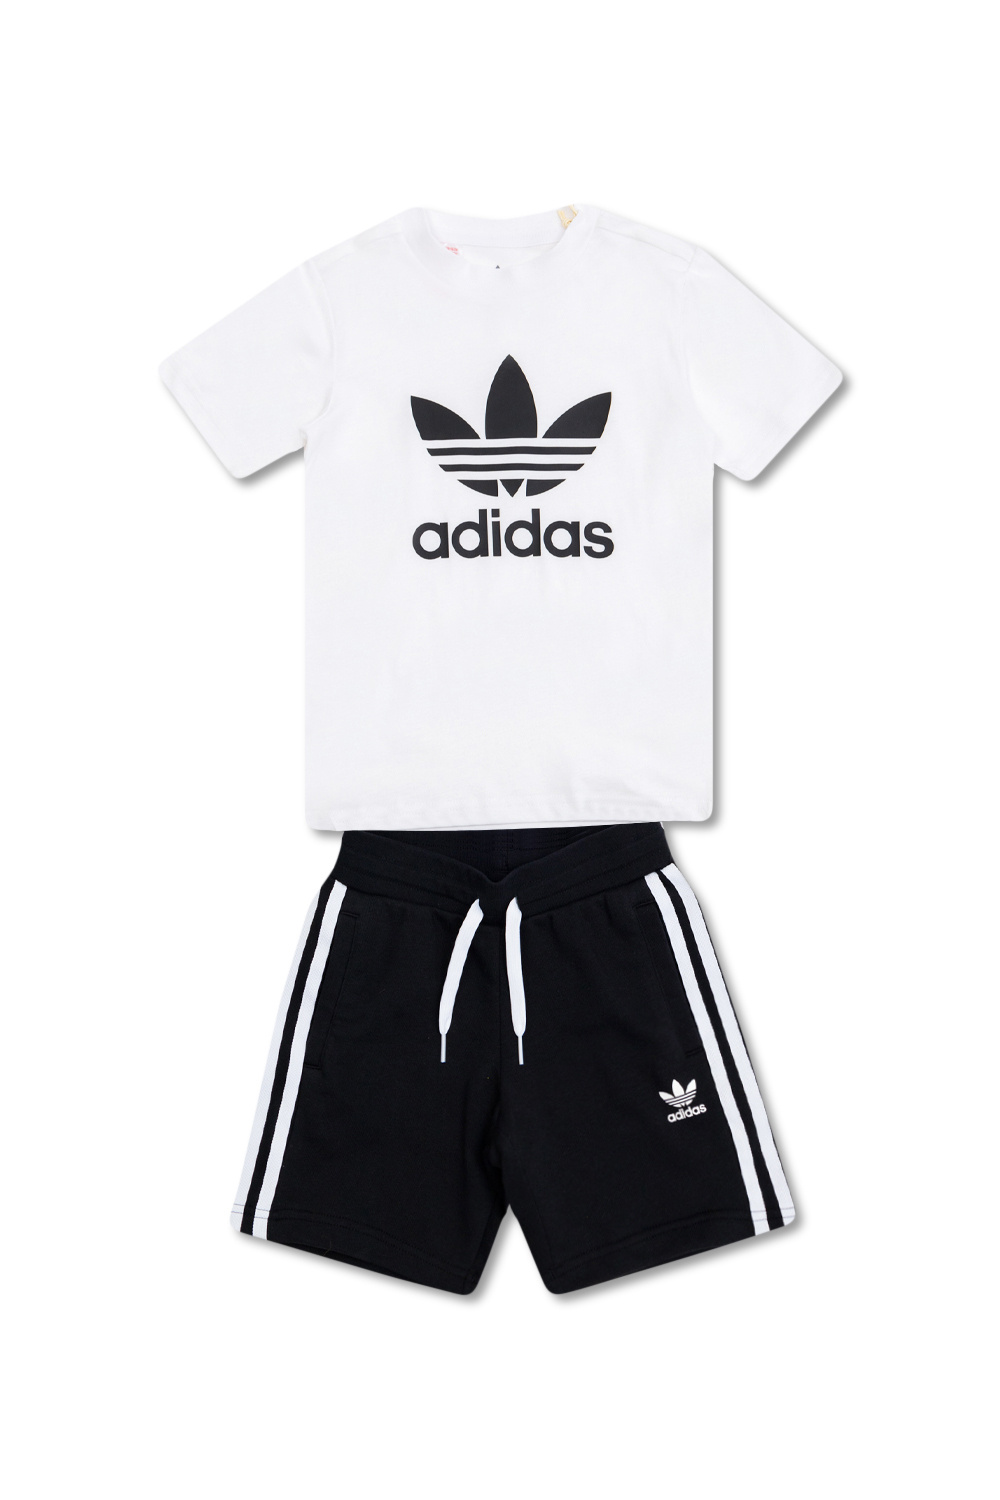 Louis Vuitton boy set, t-shirt, shorts, white/black Children s Sets Clothing  Mother Kids - AliExpress